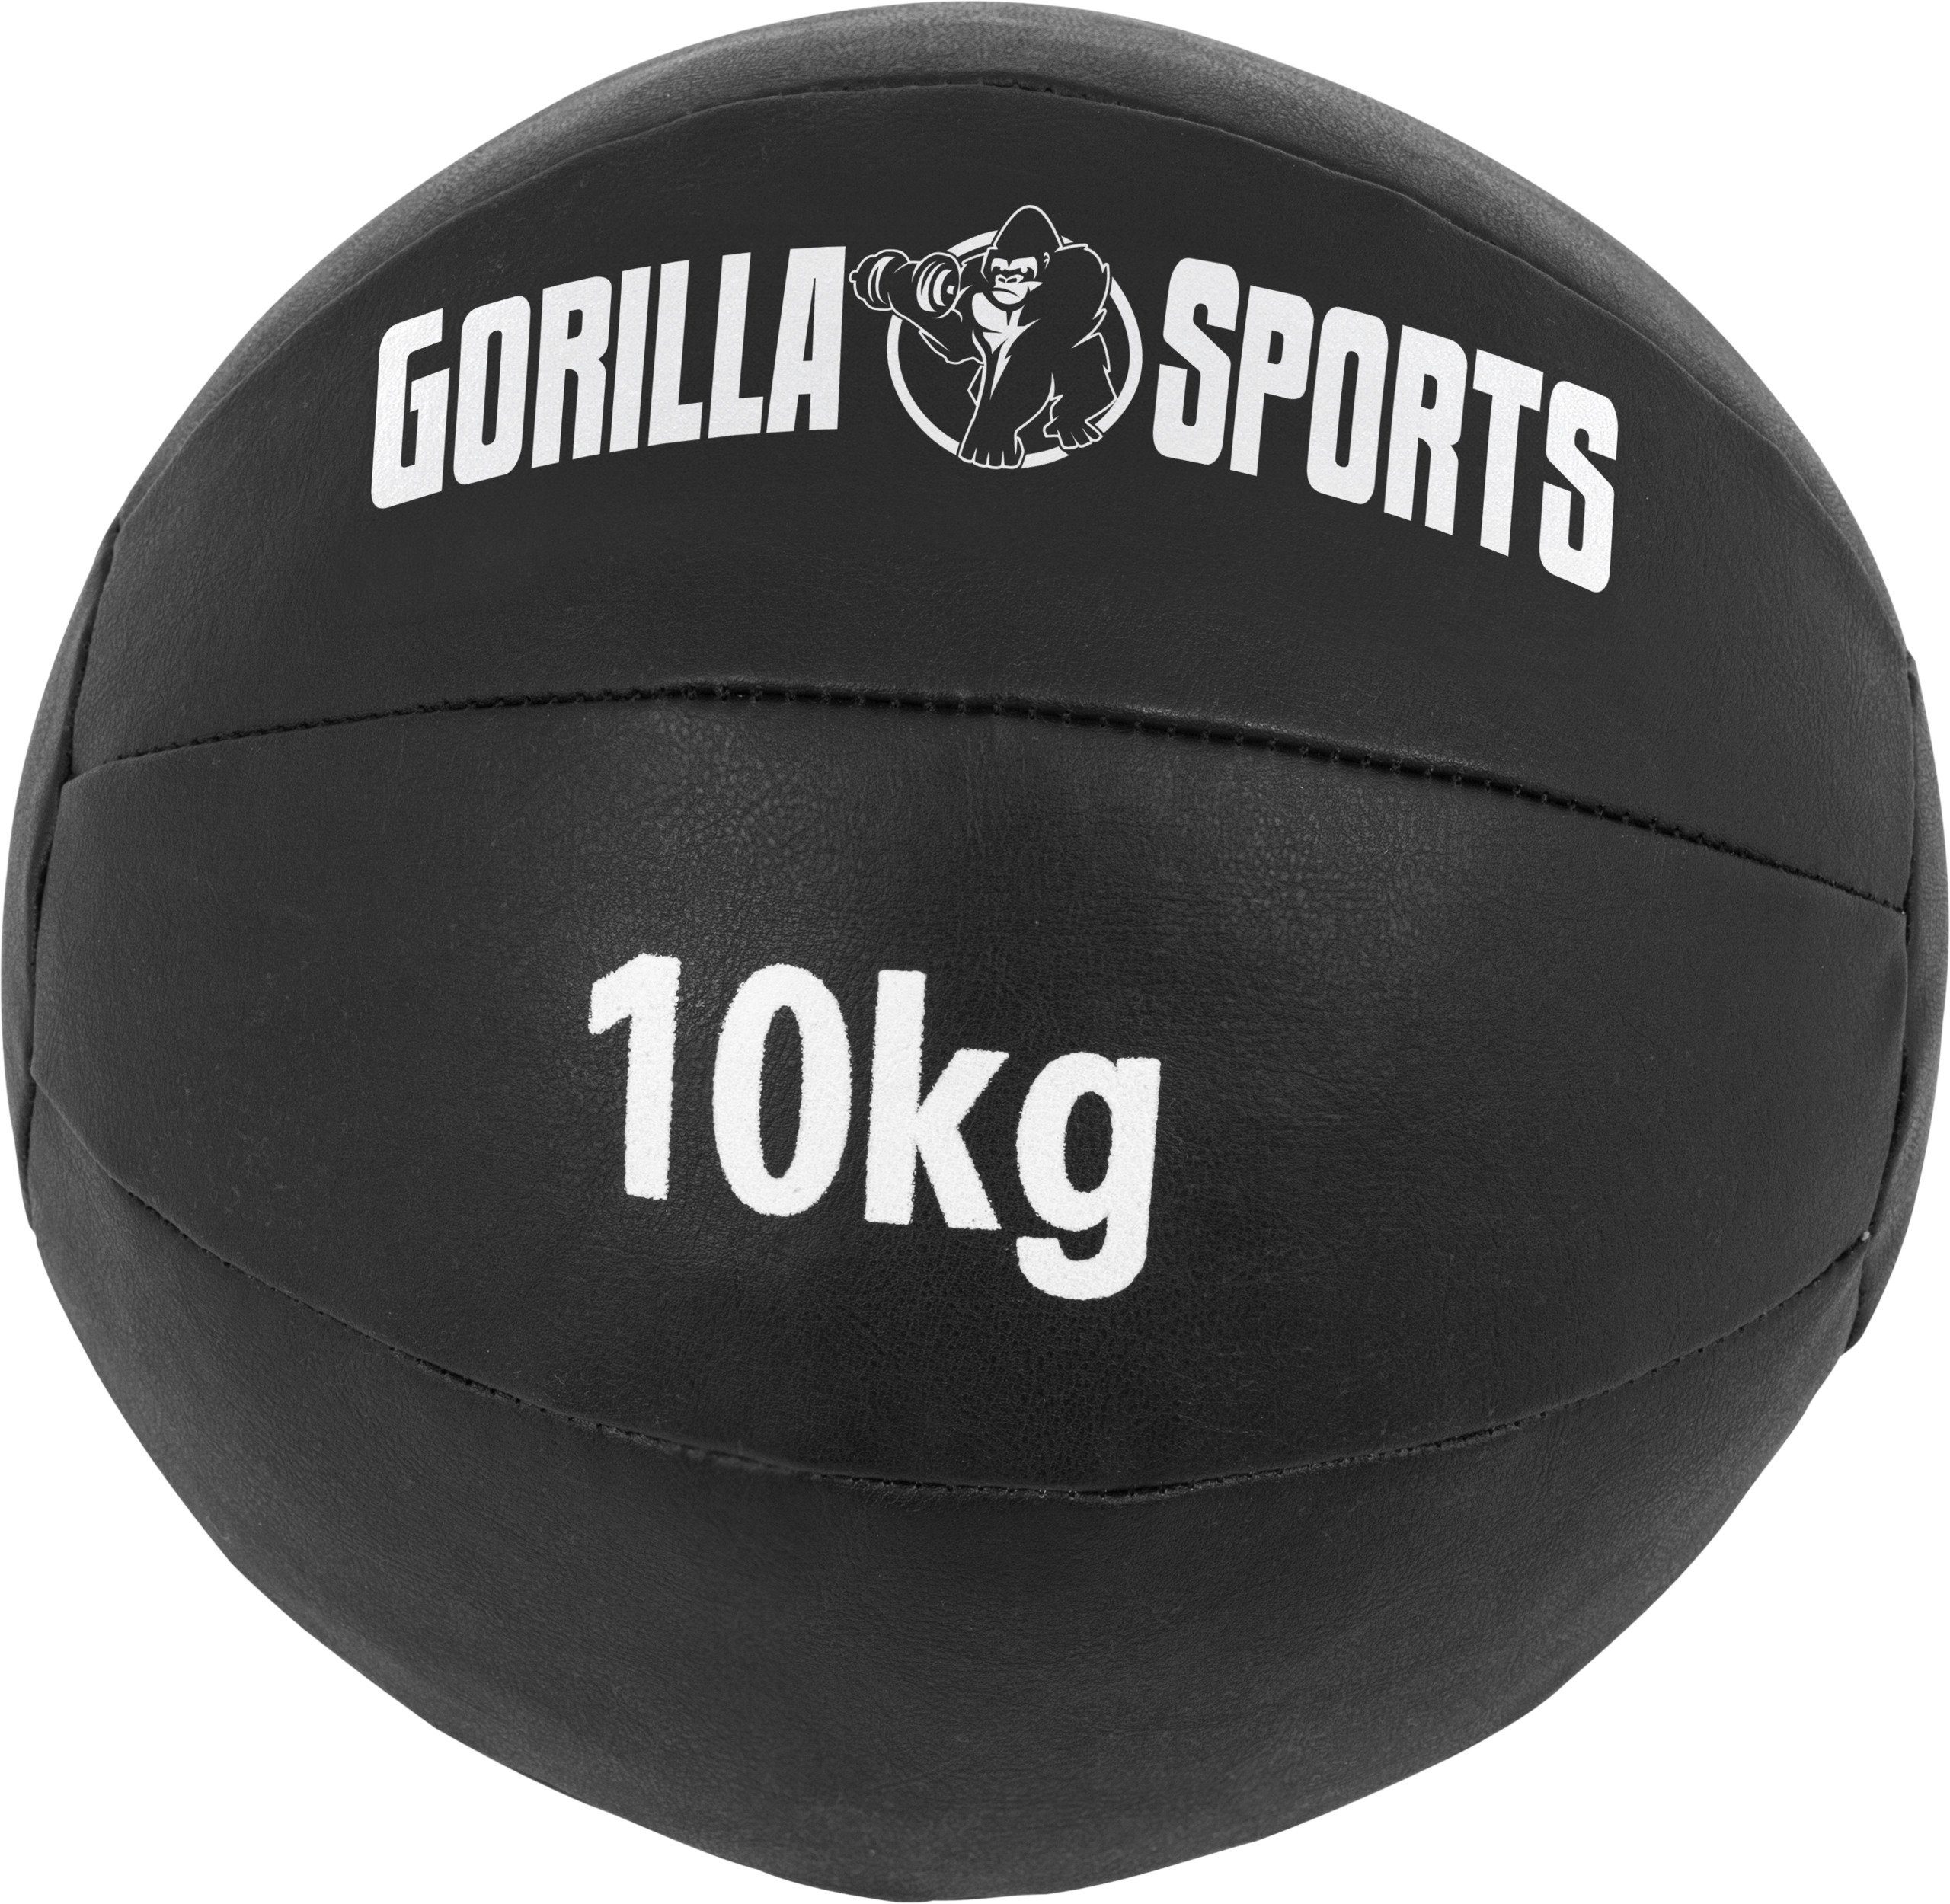 GORILLA SPORTS Medizinball Einzeln/Set, 29cm, aus Leder, Trainingsball, Fitnessball, Gewichtsball 10 kg | Medizinbälle